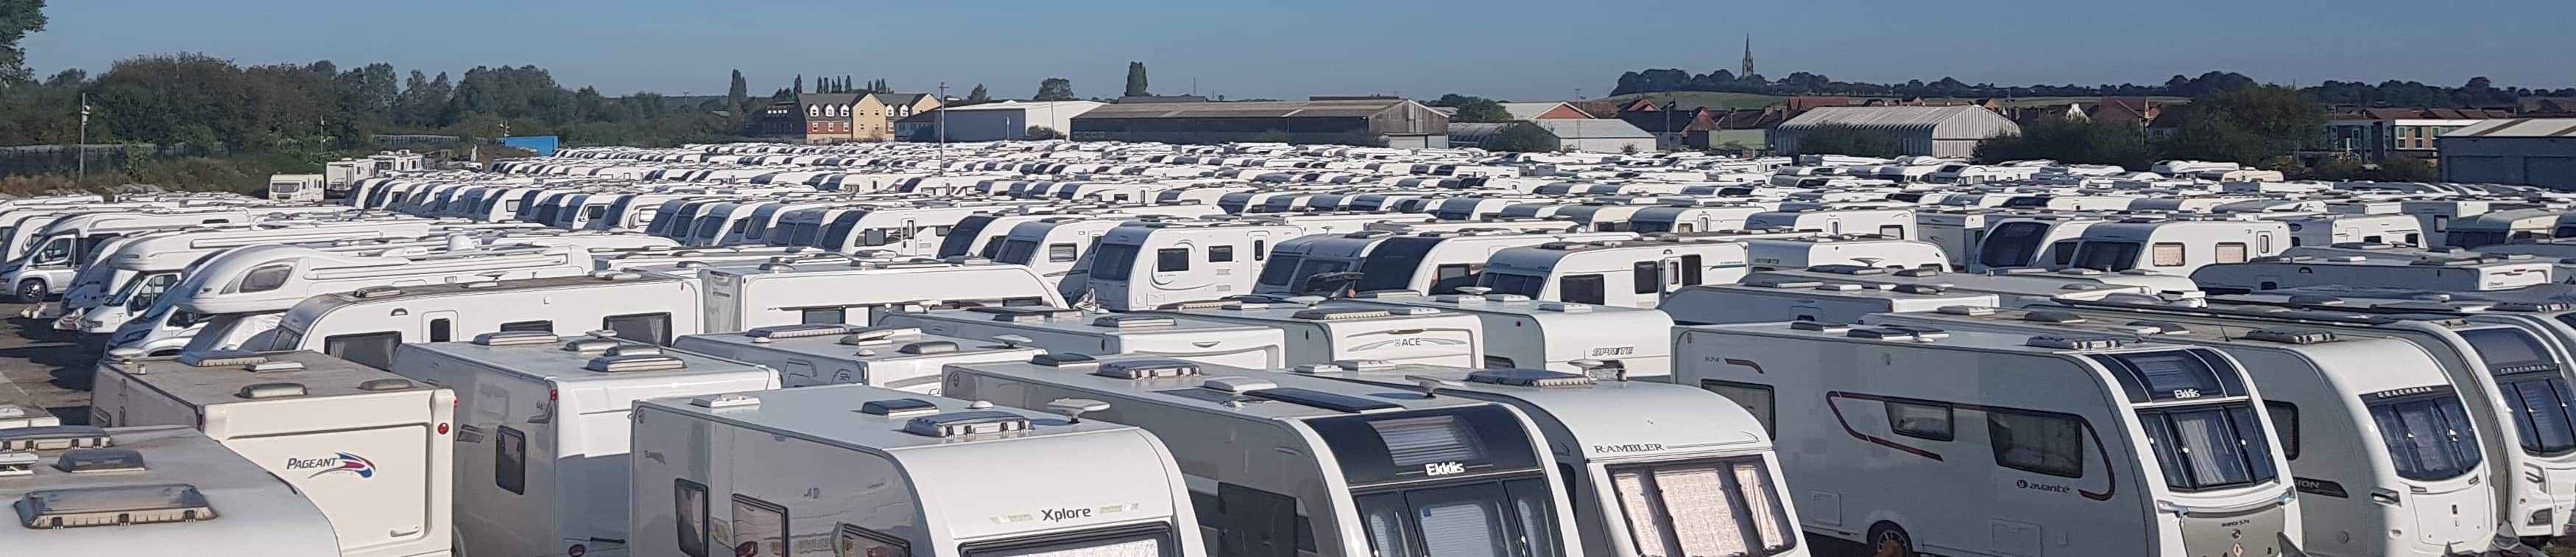 secure caravan storage south yorkshire